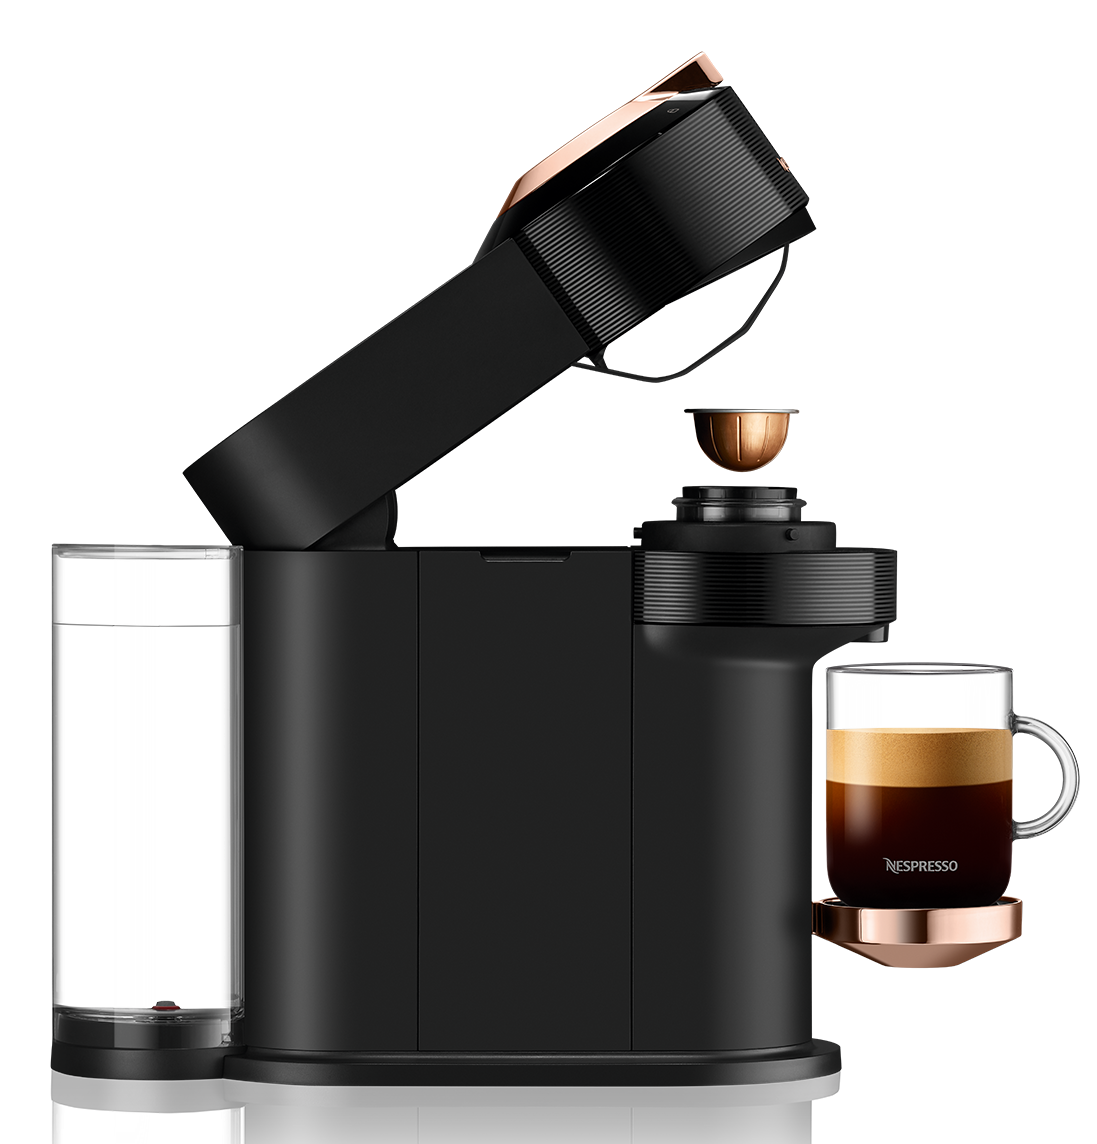 Nespresso Vertuo Next Premium Coffee and Espresso Maker by Delonghi with Aeroccino Milk Frother, Black Rose Gold